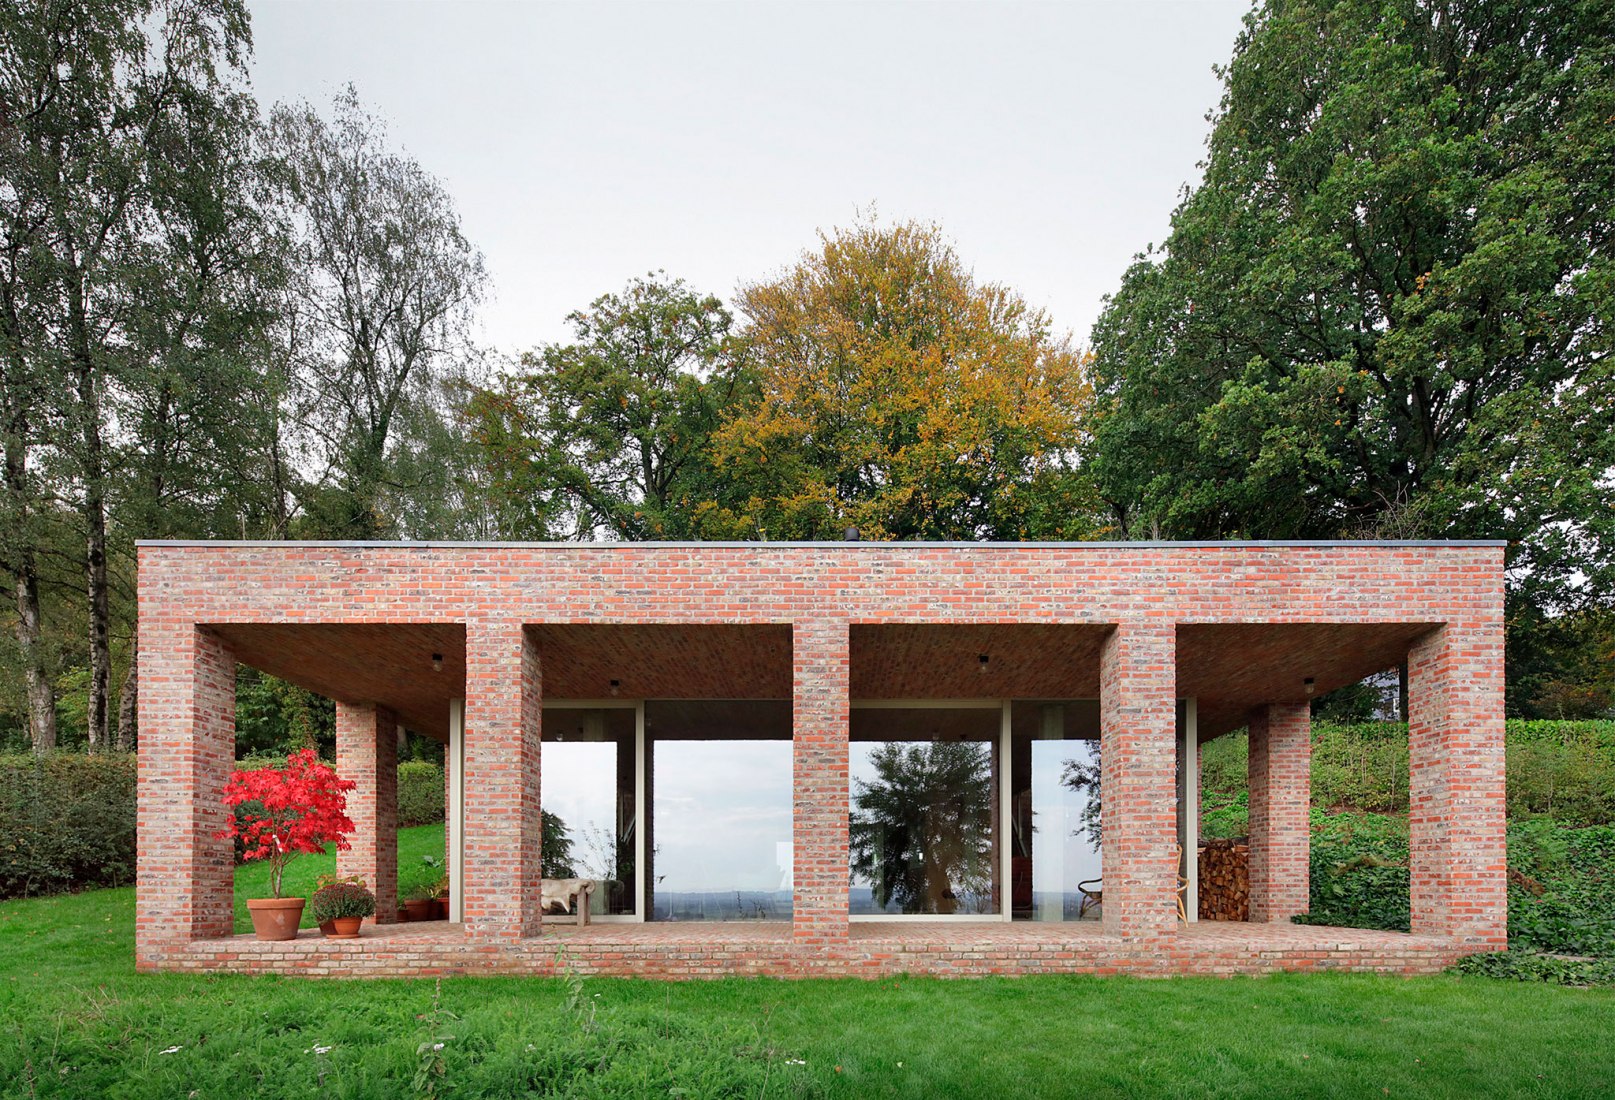 Sloped Villa por Studio Okami en Bélgica. Fotografía por Filip Dujardin